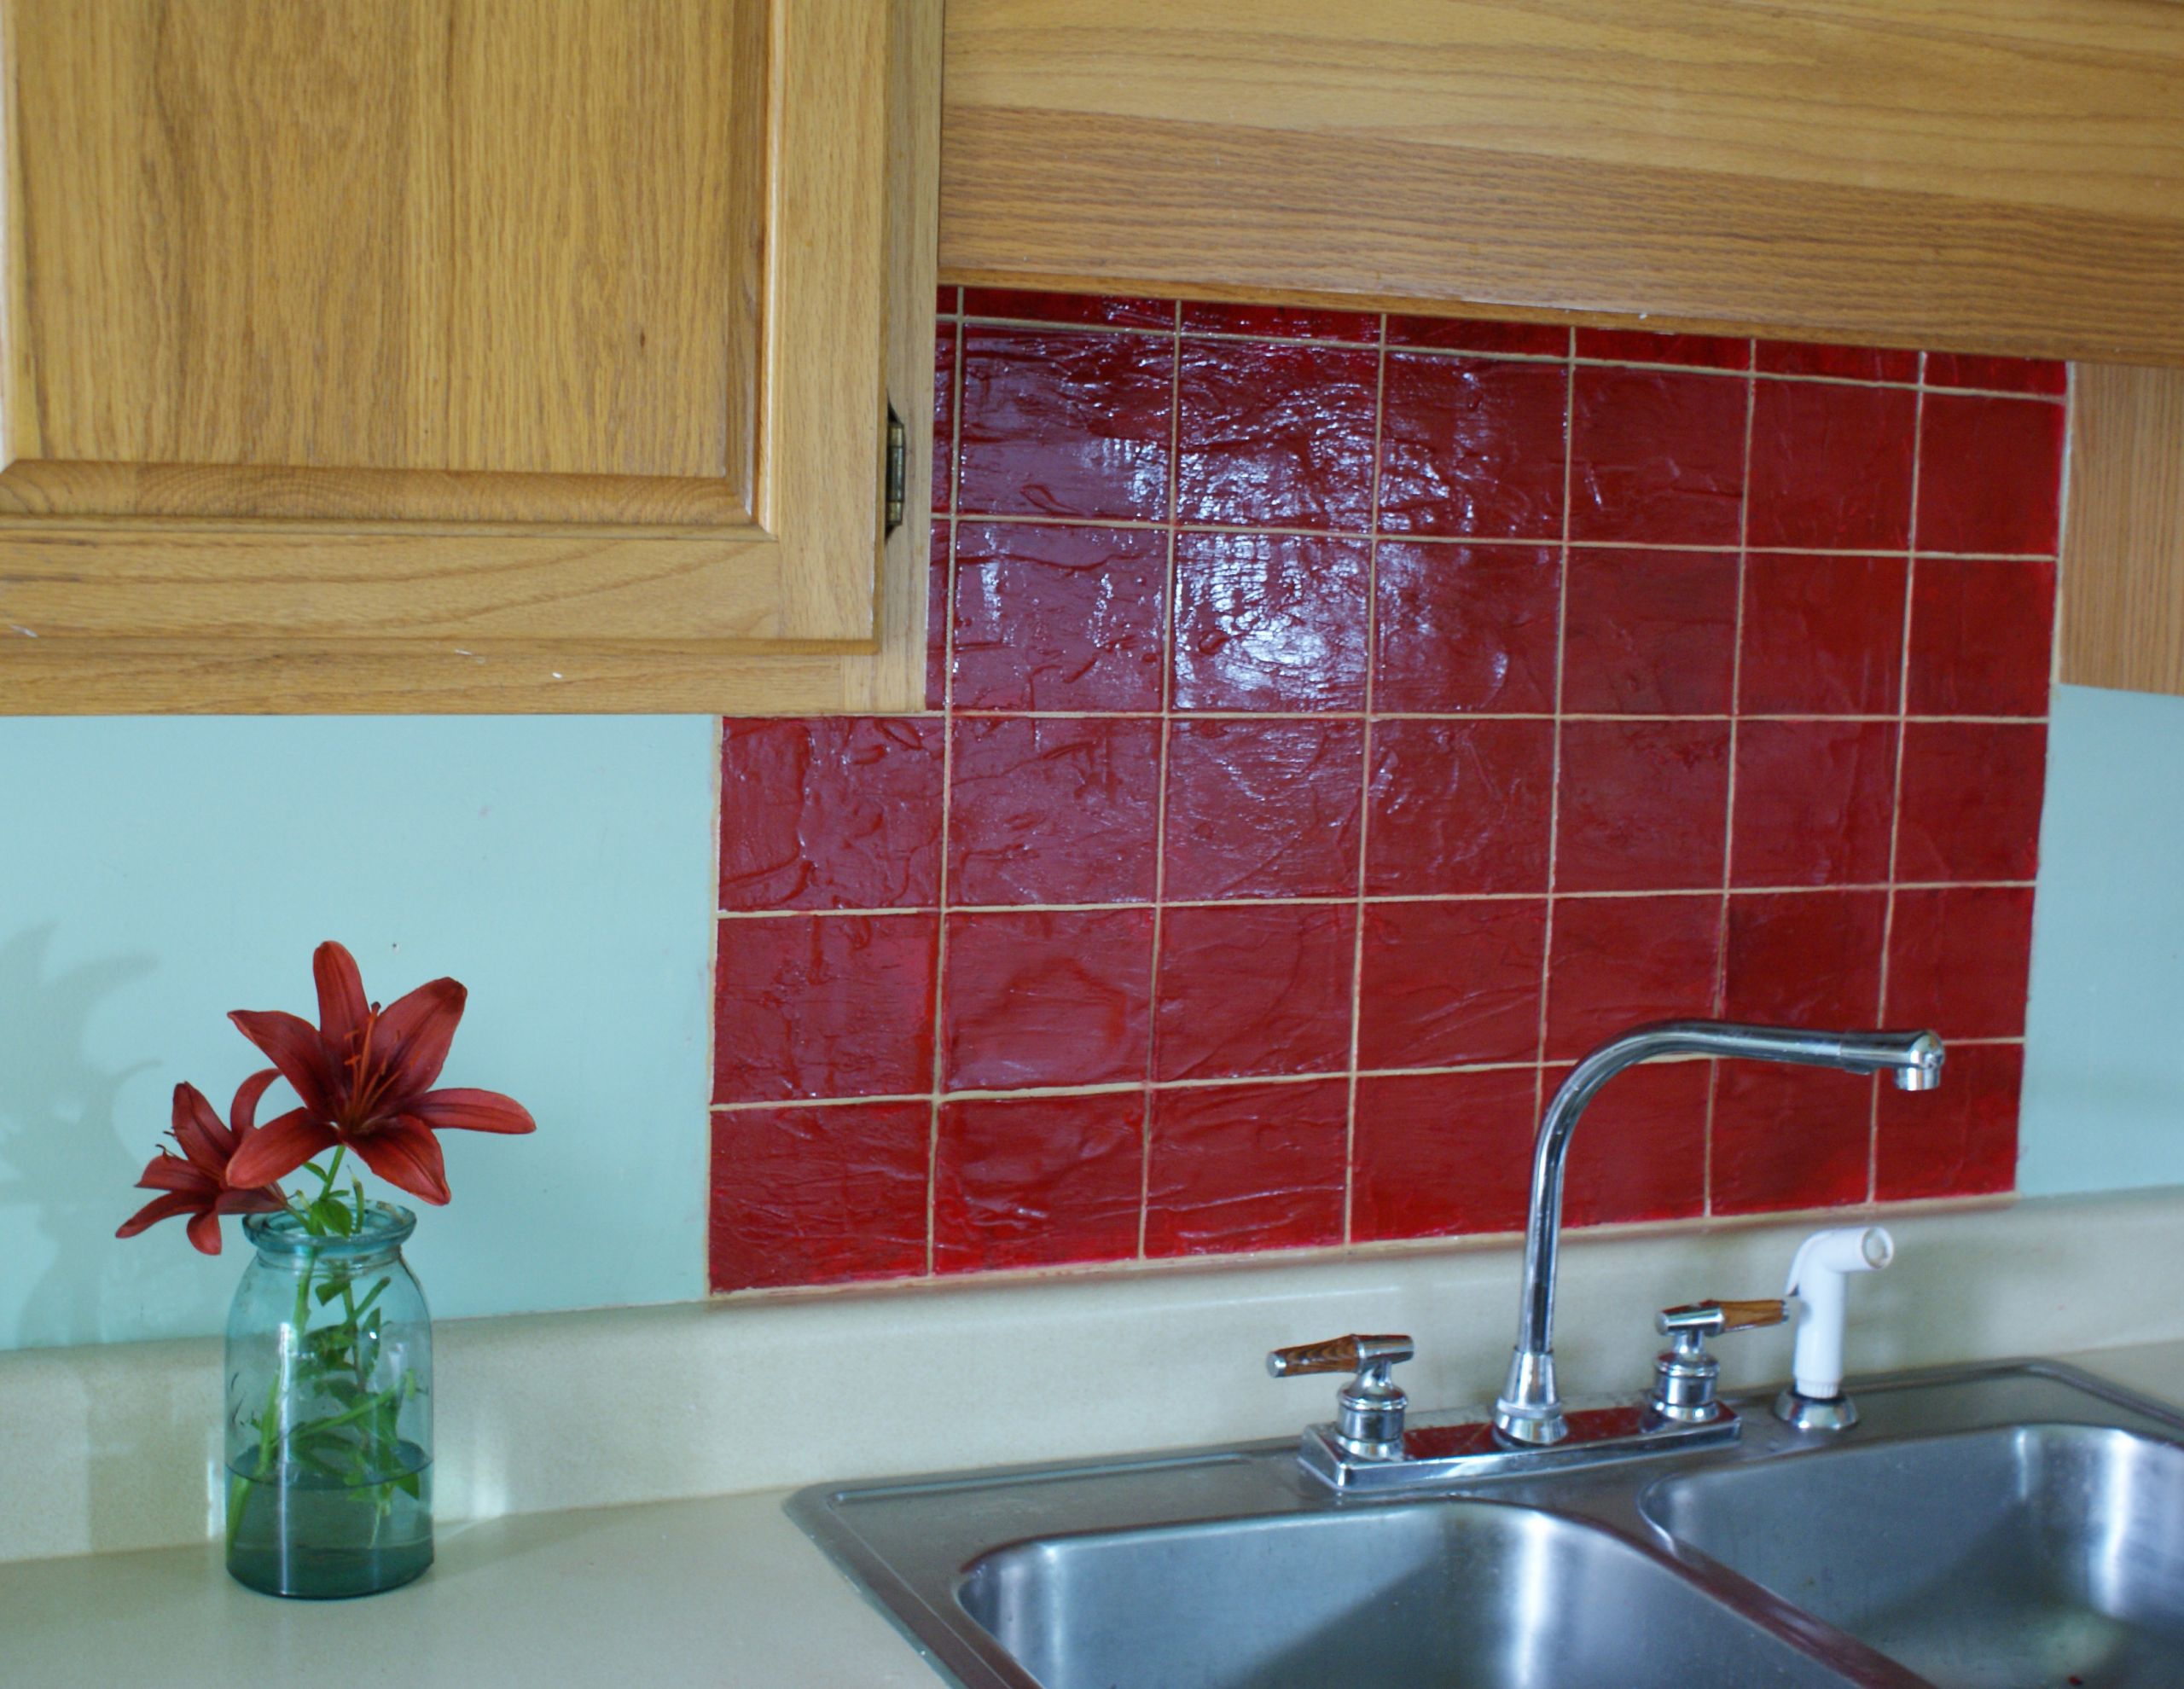 Kitchen Tile Backsplash Pics
 Faux Tile Kitchen Backsplash